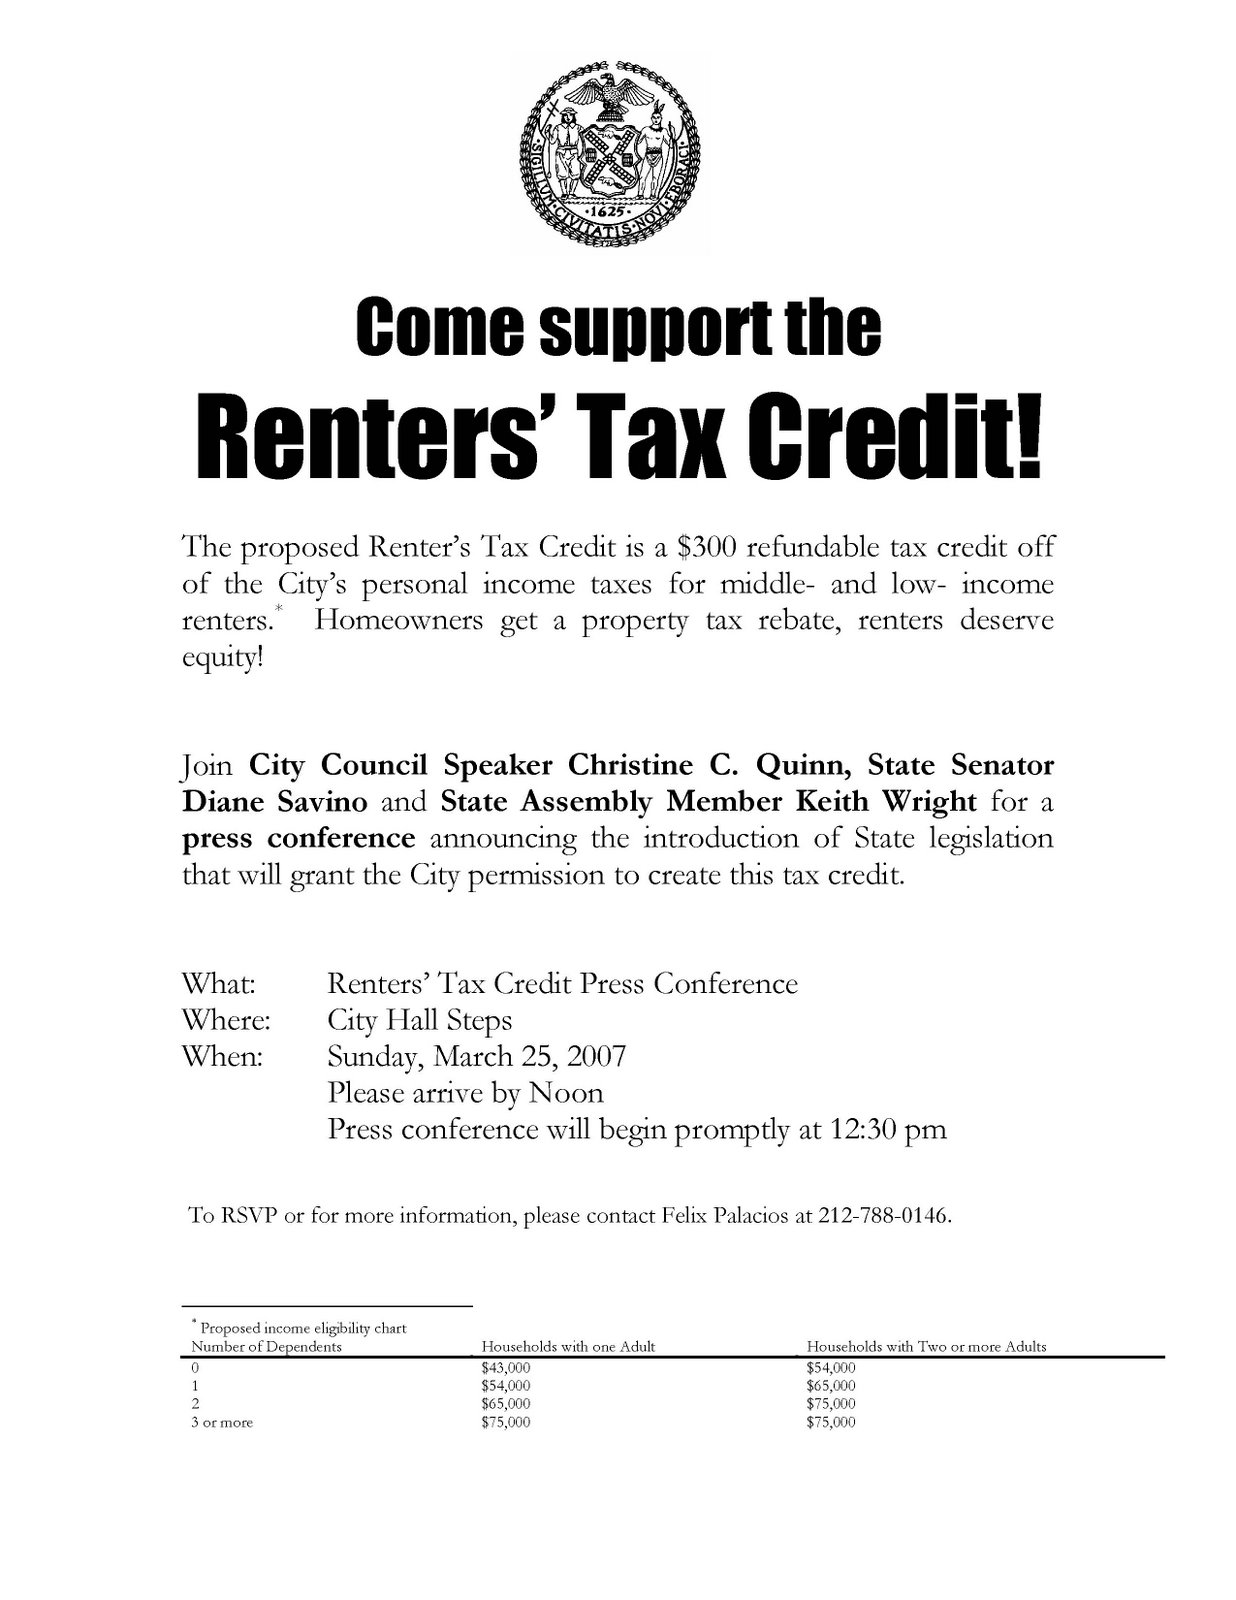 [Renter's+Tax_Credit_Press_Conference.jpg]